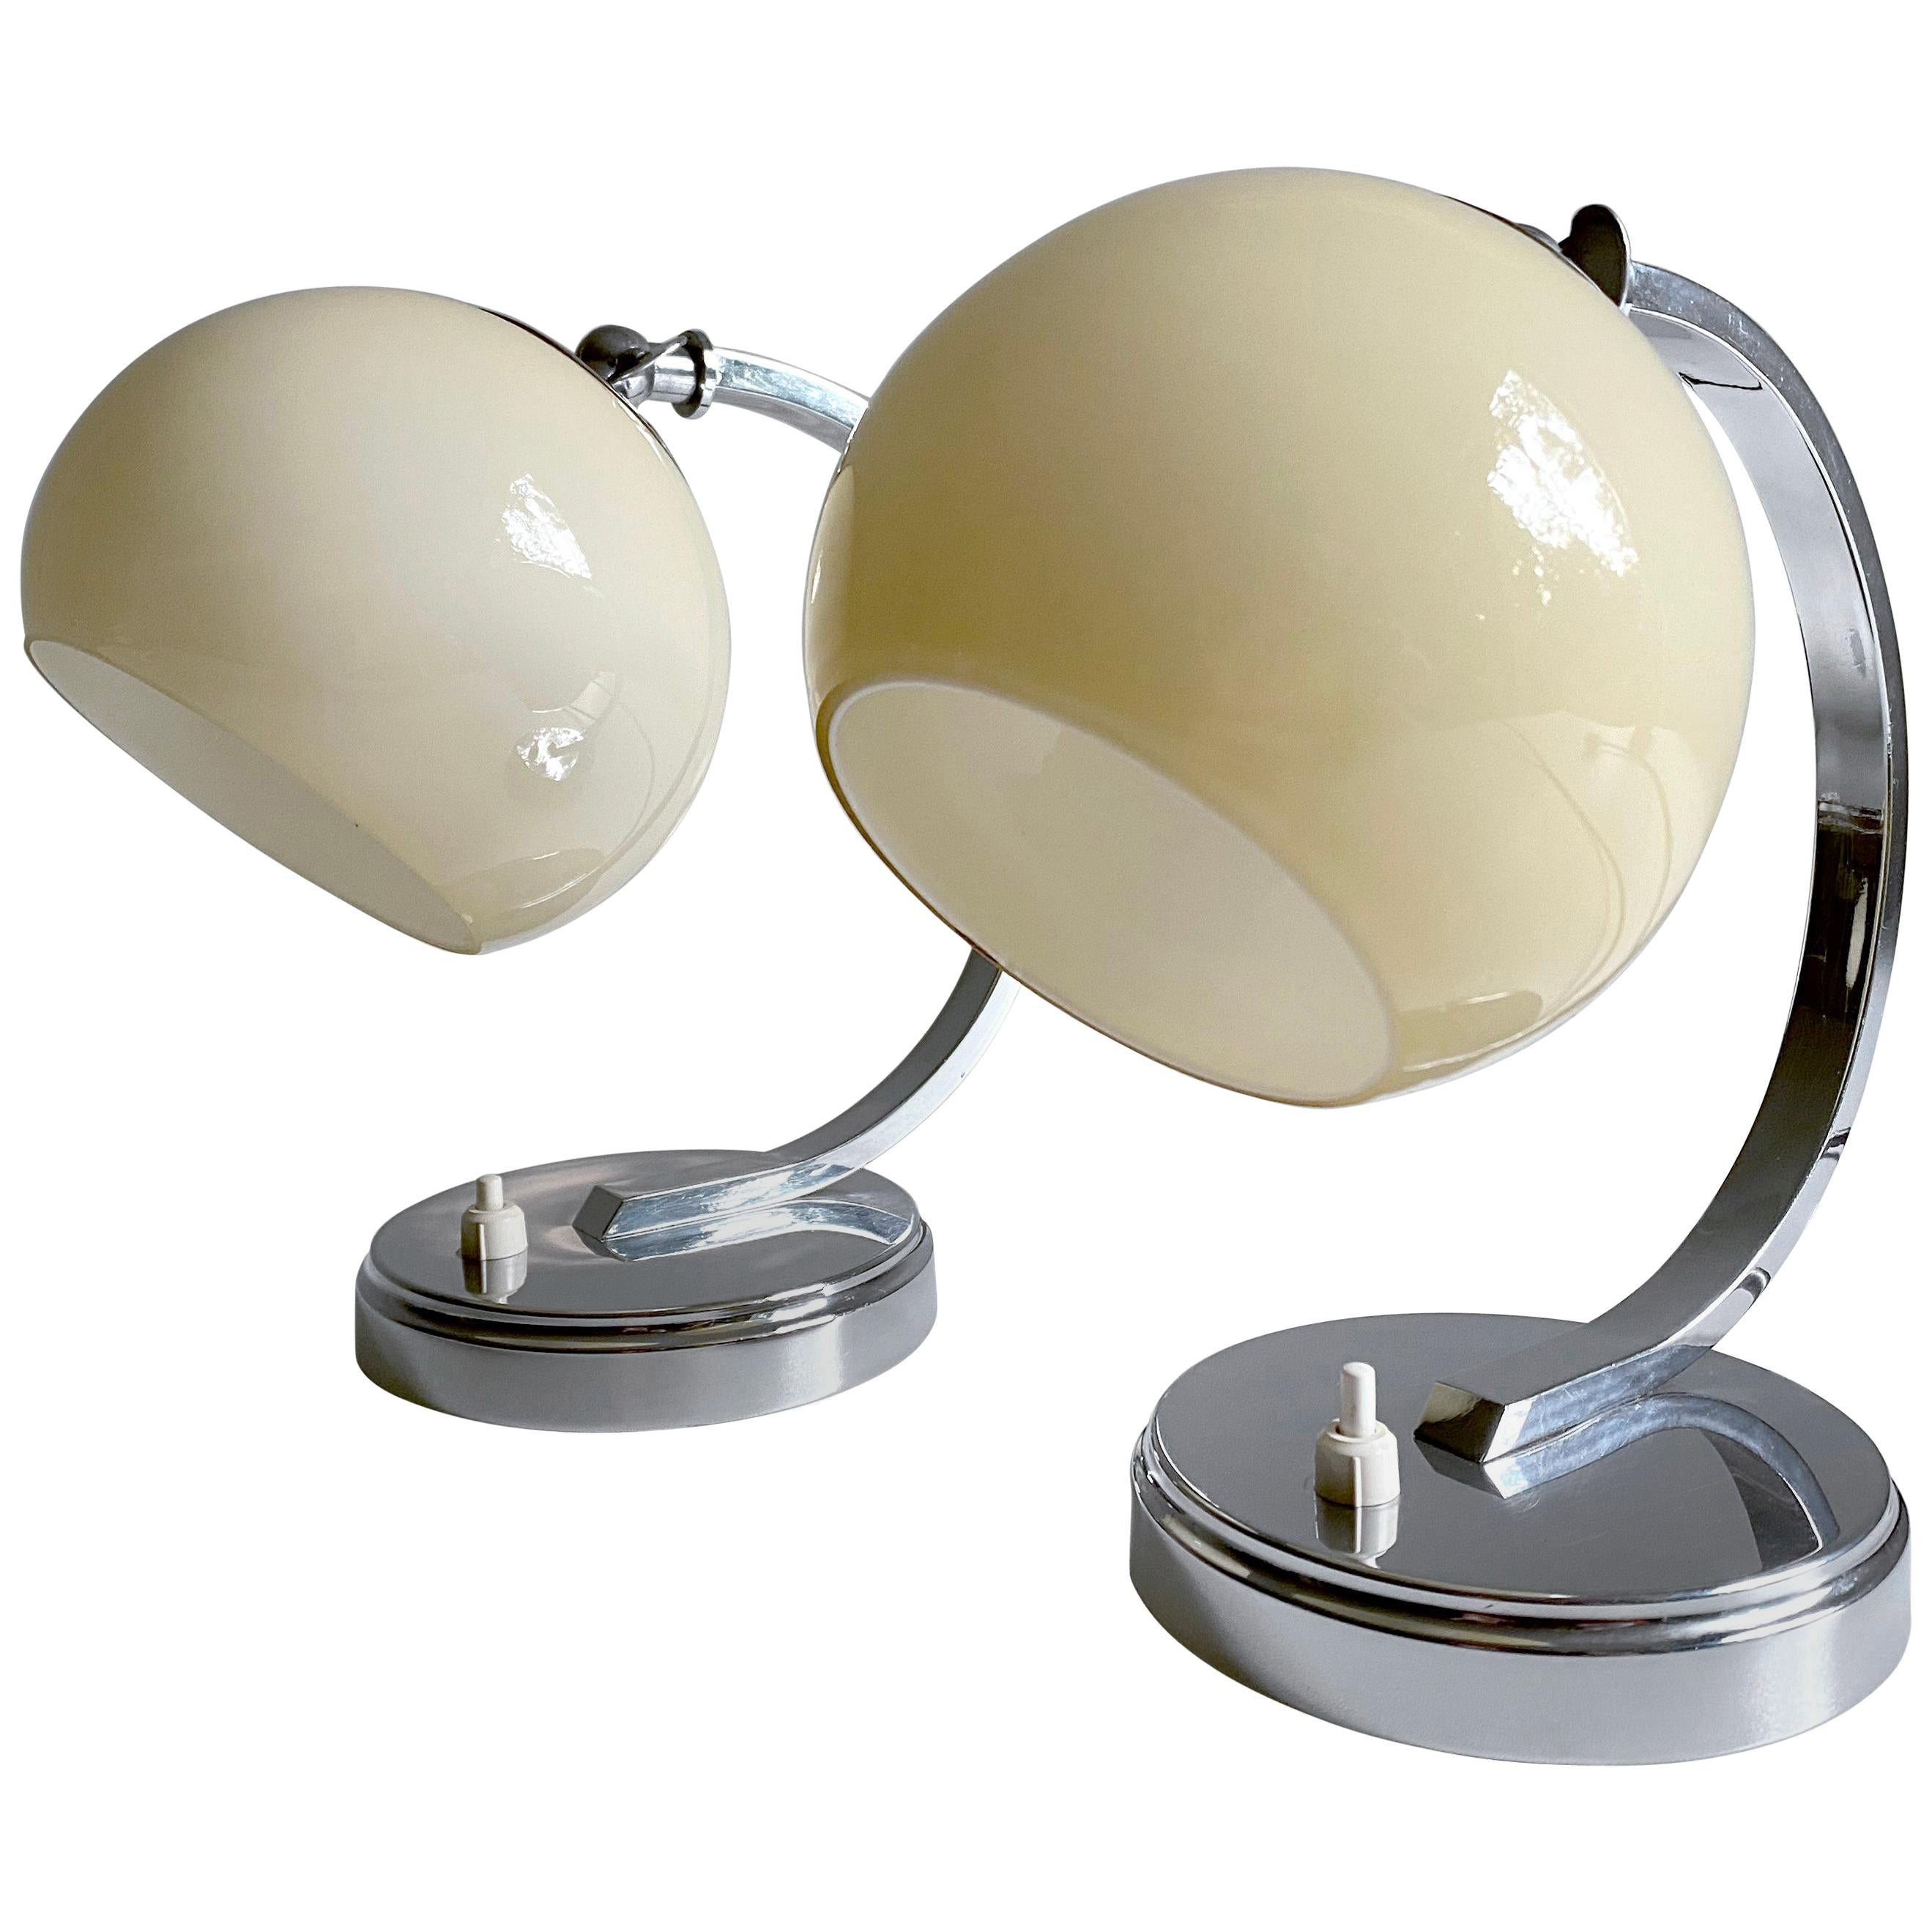  Pair of Art Deco Bauhaus Table Lamps Lights, Chrome Opaline  Glass, 1930s  For Sale